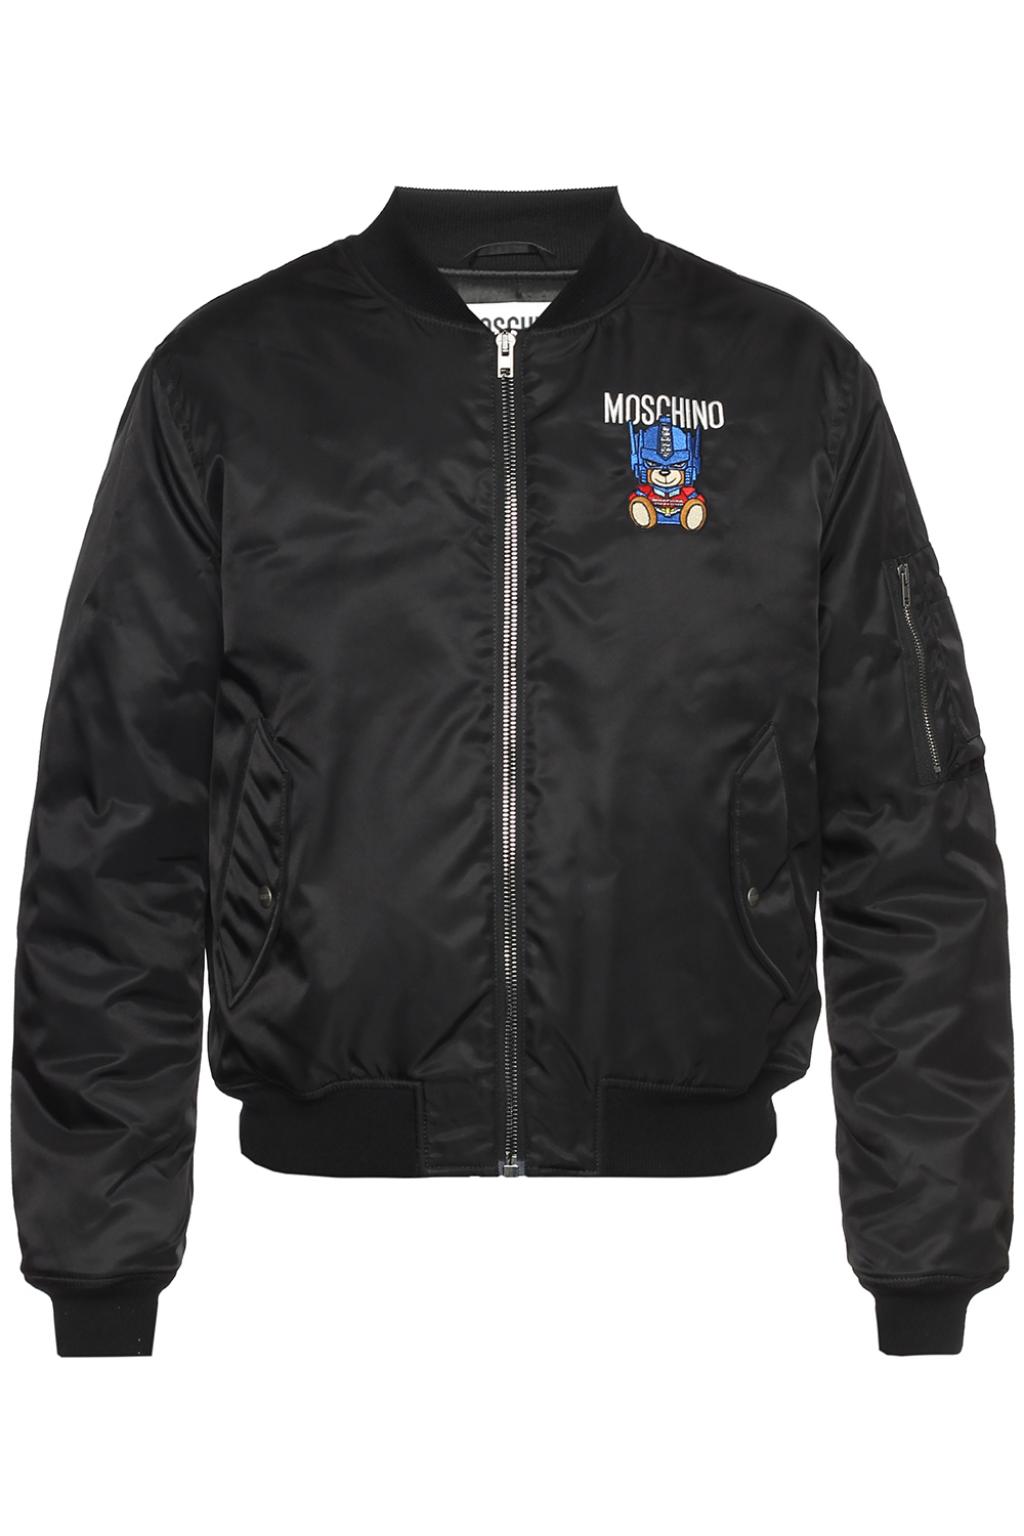 Moschino Bomber jacket | Men's Clothing | Vitkac